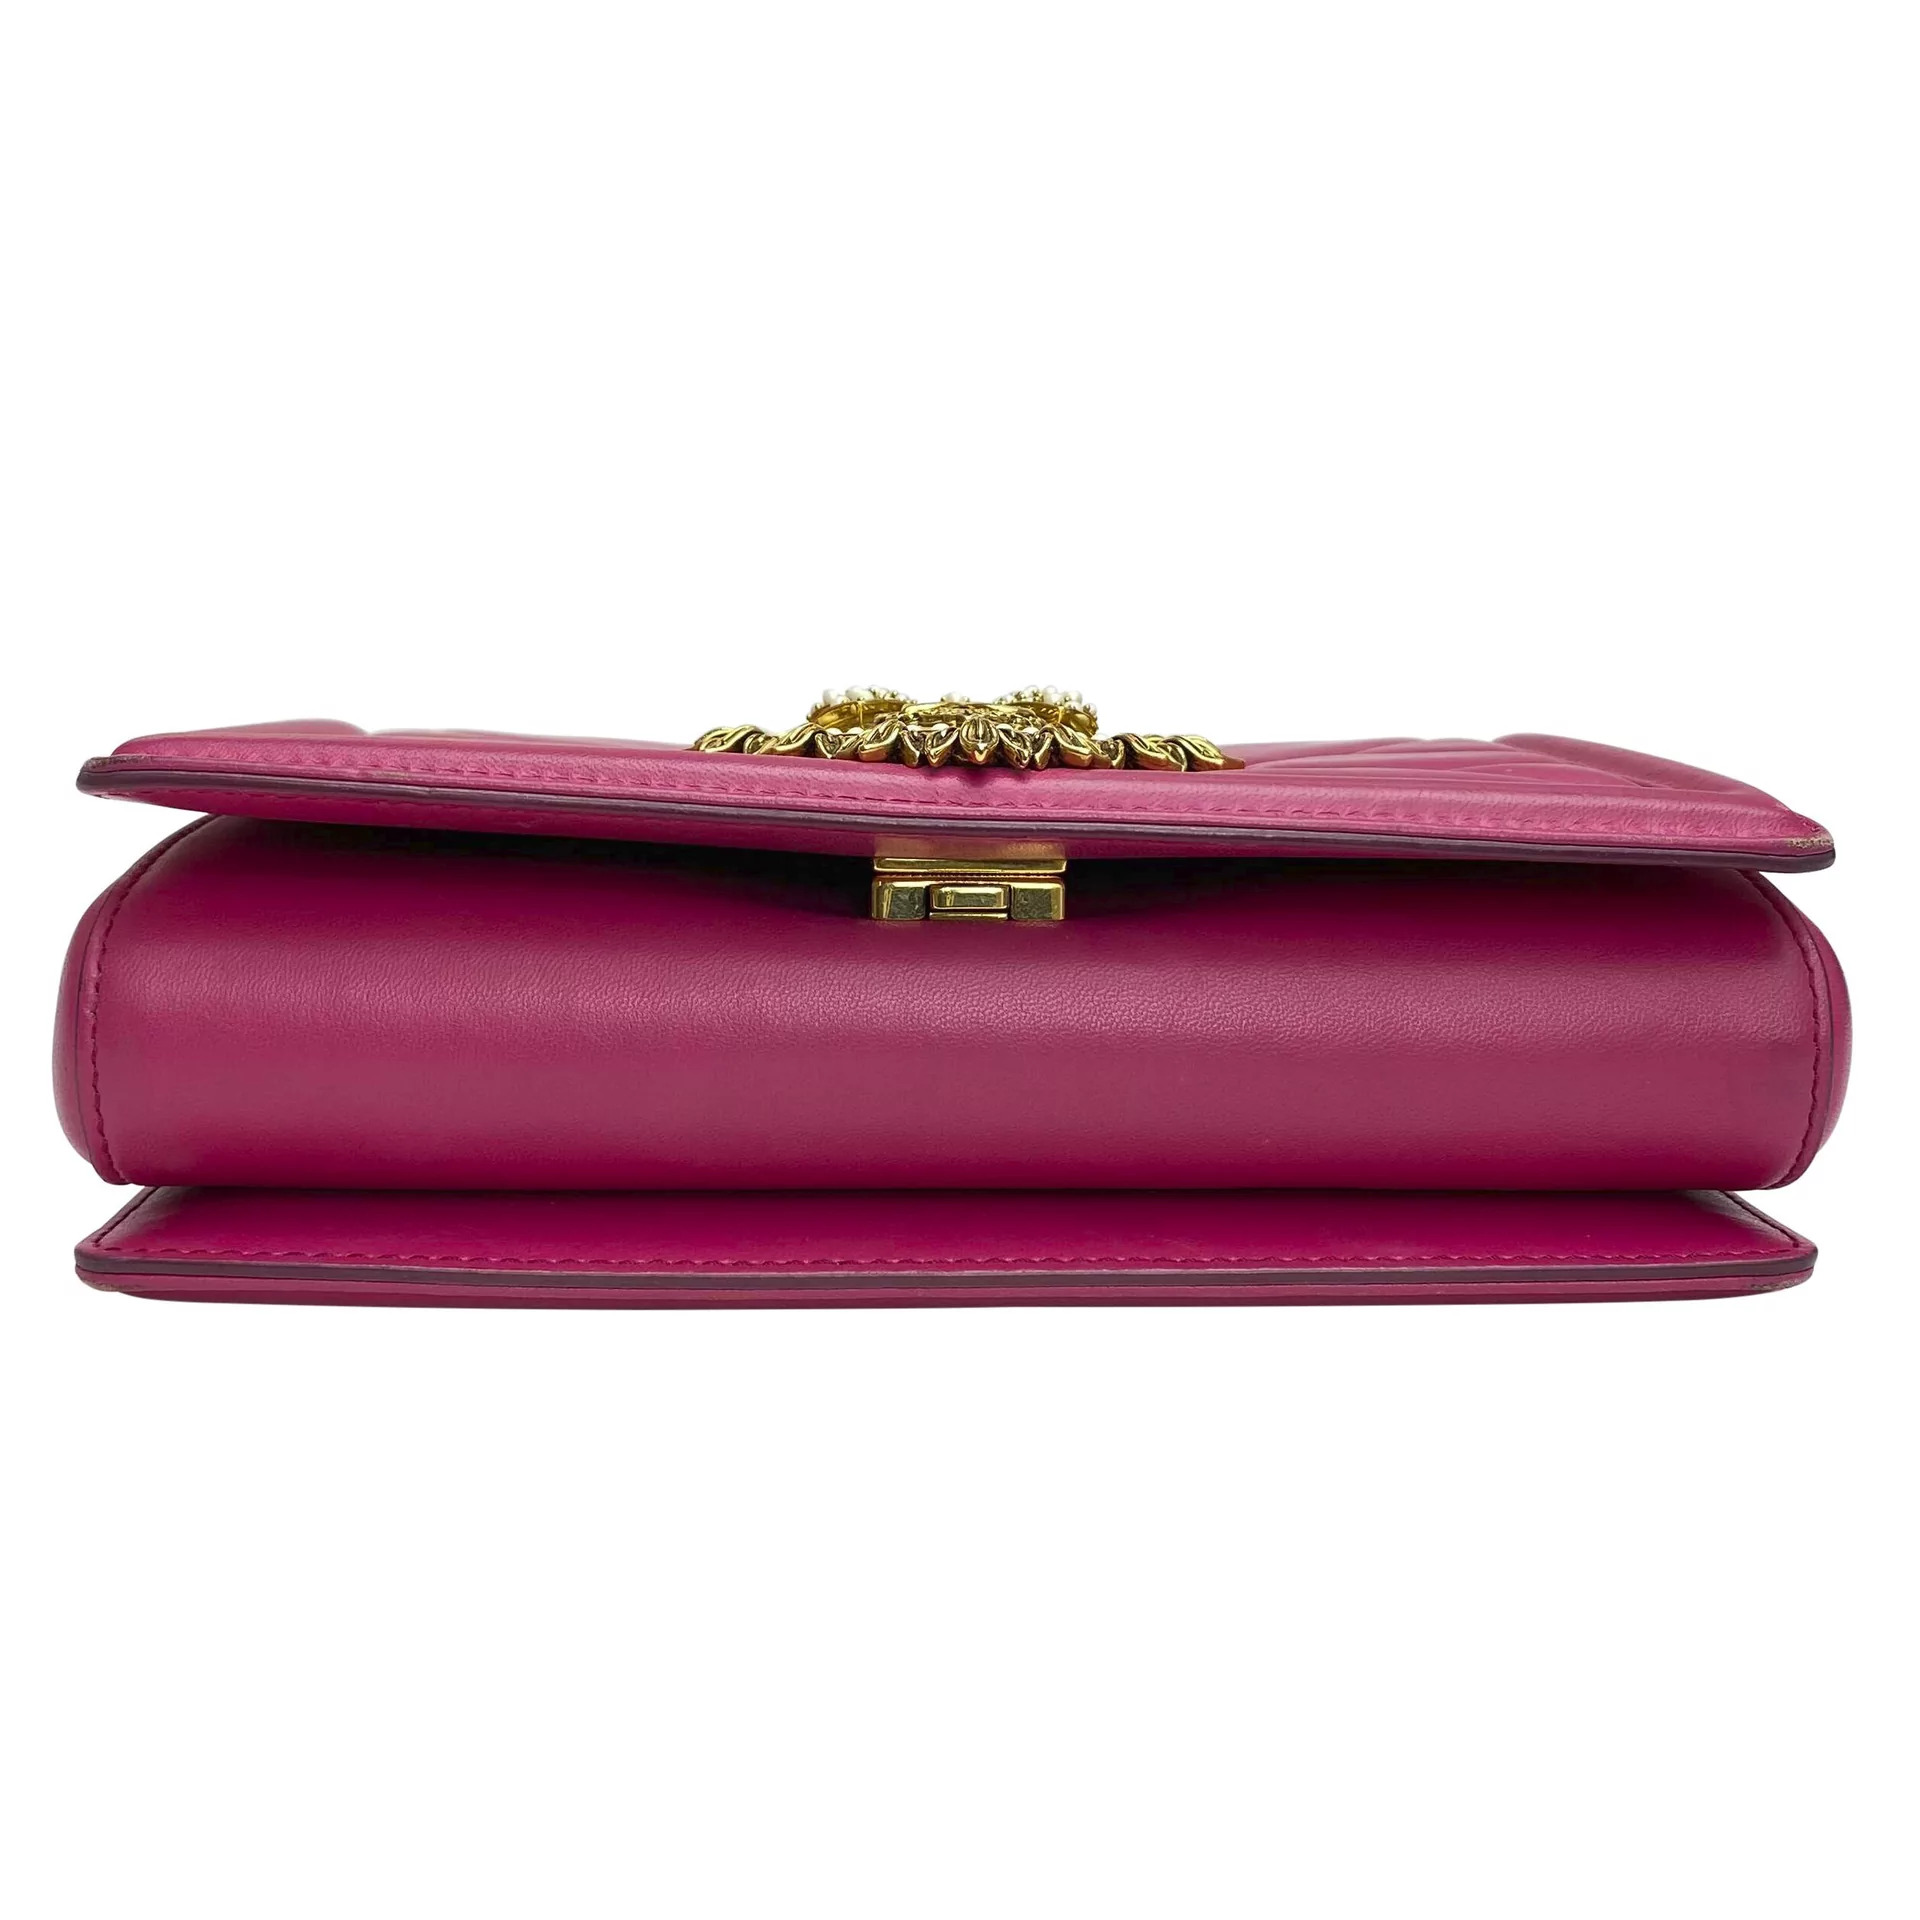 Bolsa Dolce & Gabbana Devotion Rosa Pink